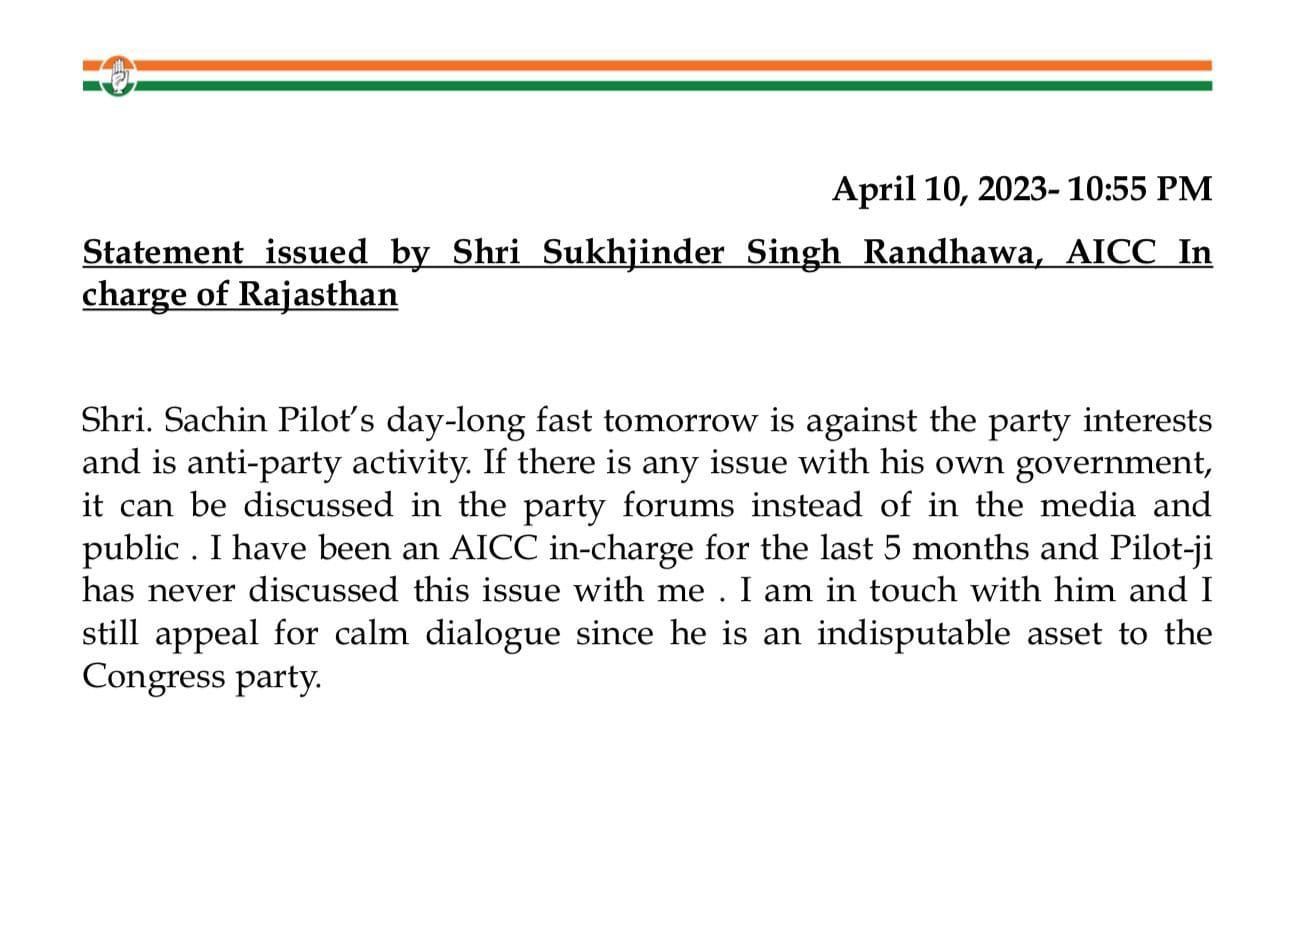 Congress declares Pilot protest illegal, will Sachin agree - Satya Hindi